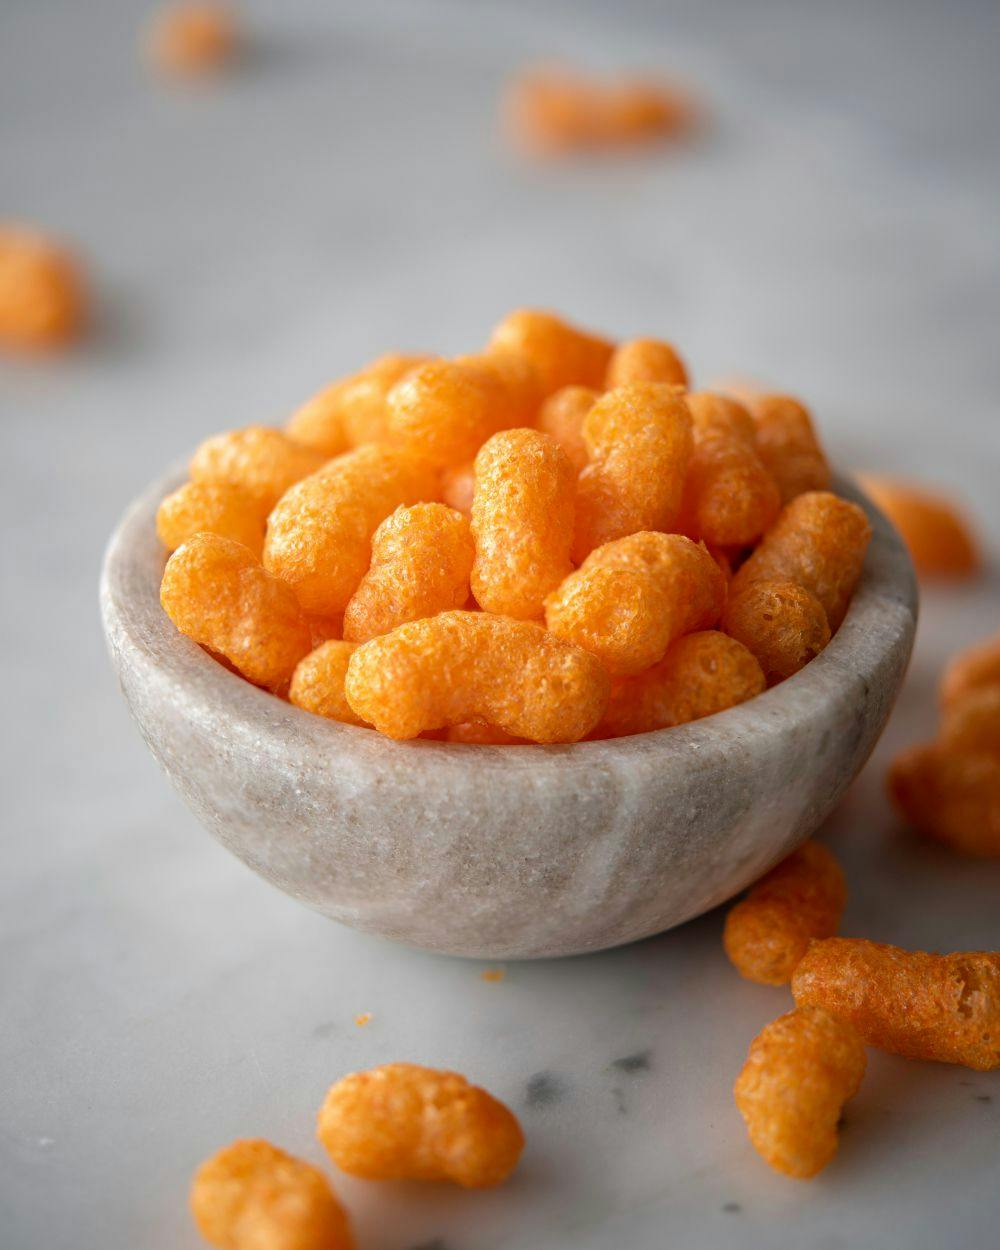 GNT calls its new paprika orange food colorant a breakthrough